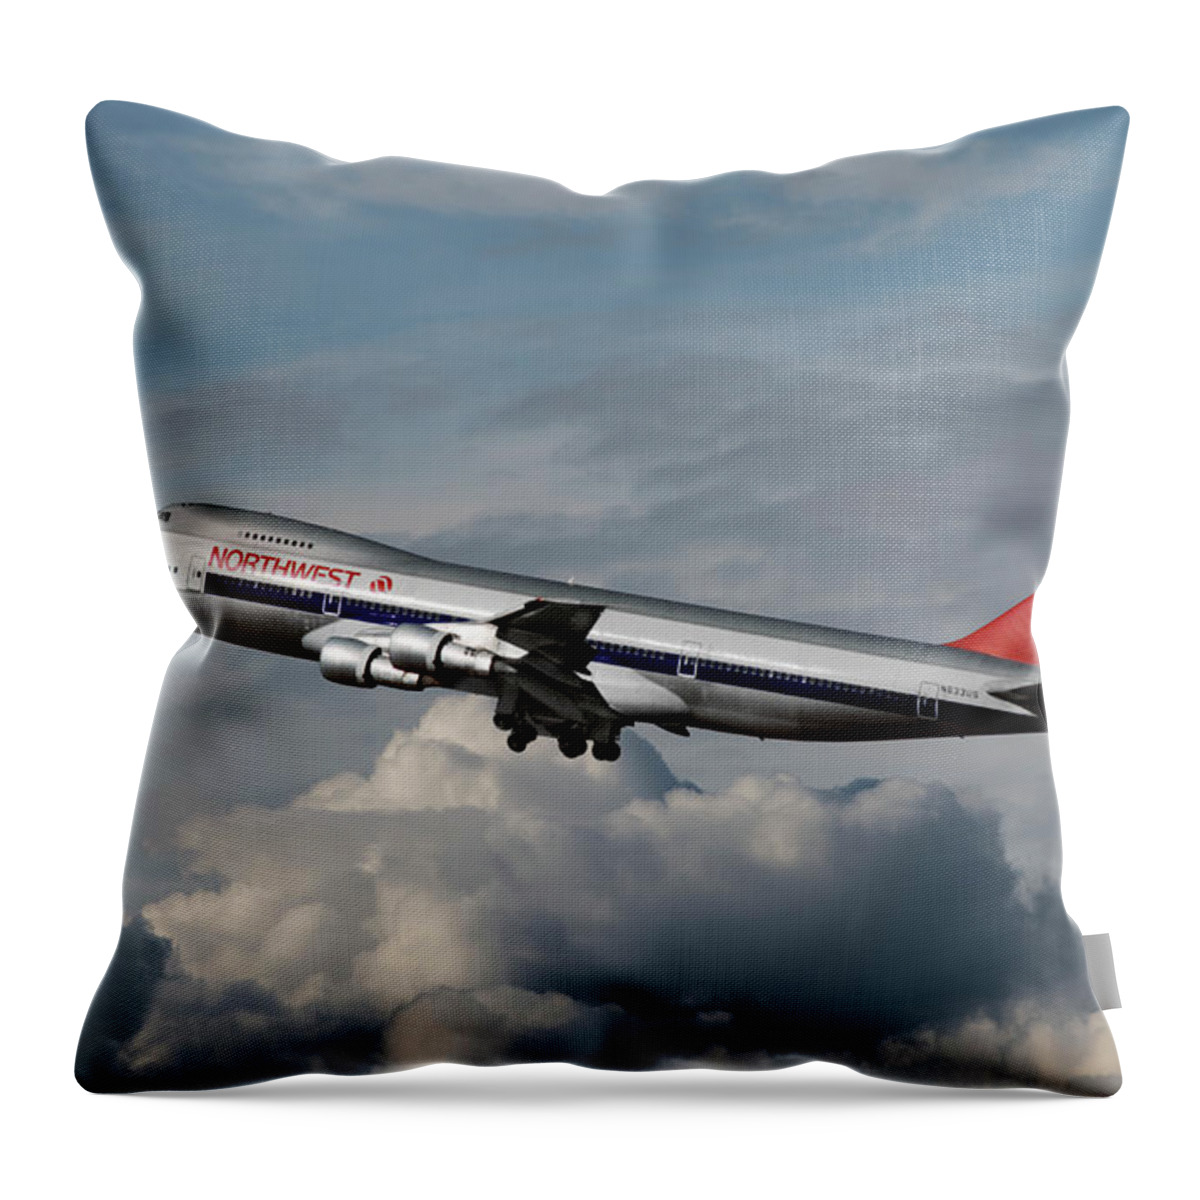 Northwest Orient Airlines Throw Pillow featuring the photograph Northwest Orient Airlines Boeing 747 by Erik Simonsen